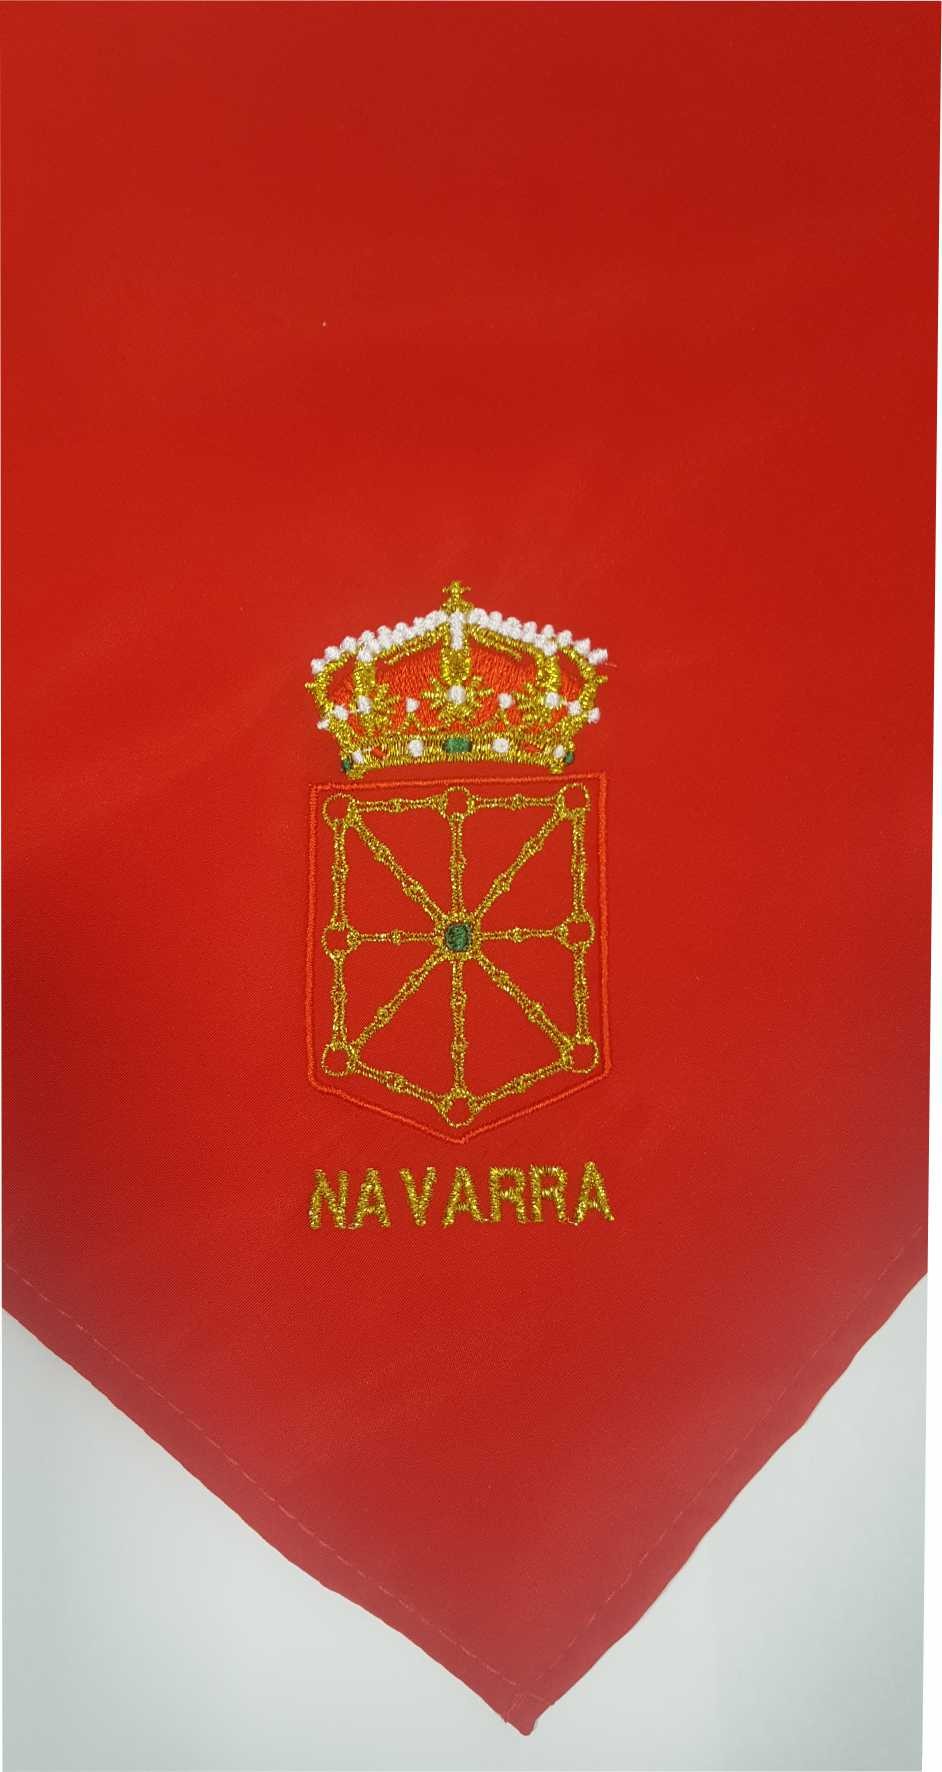 Navarra 2